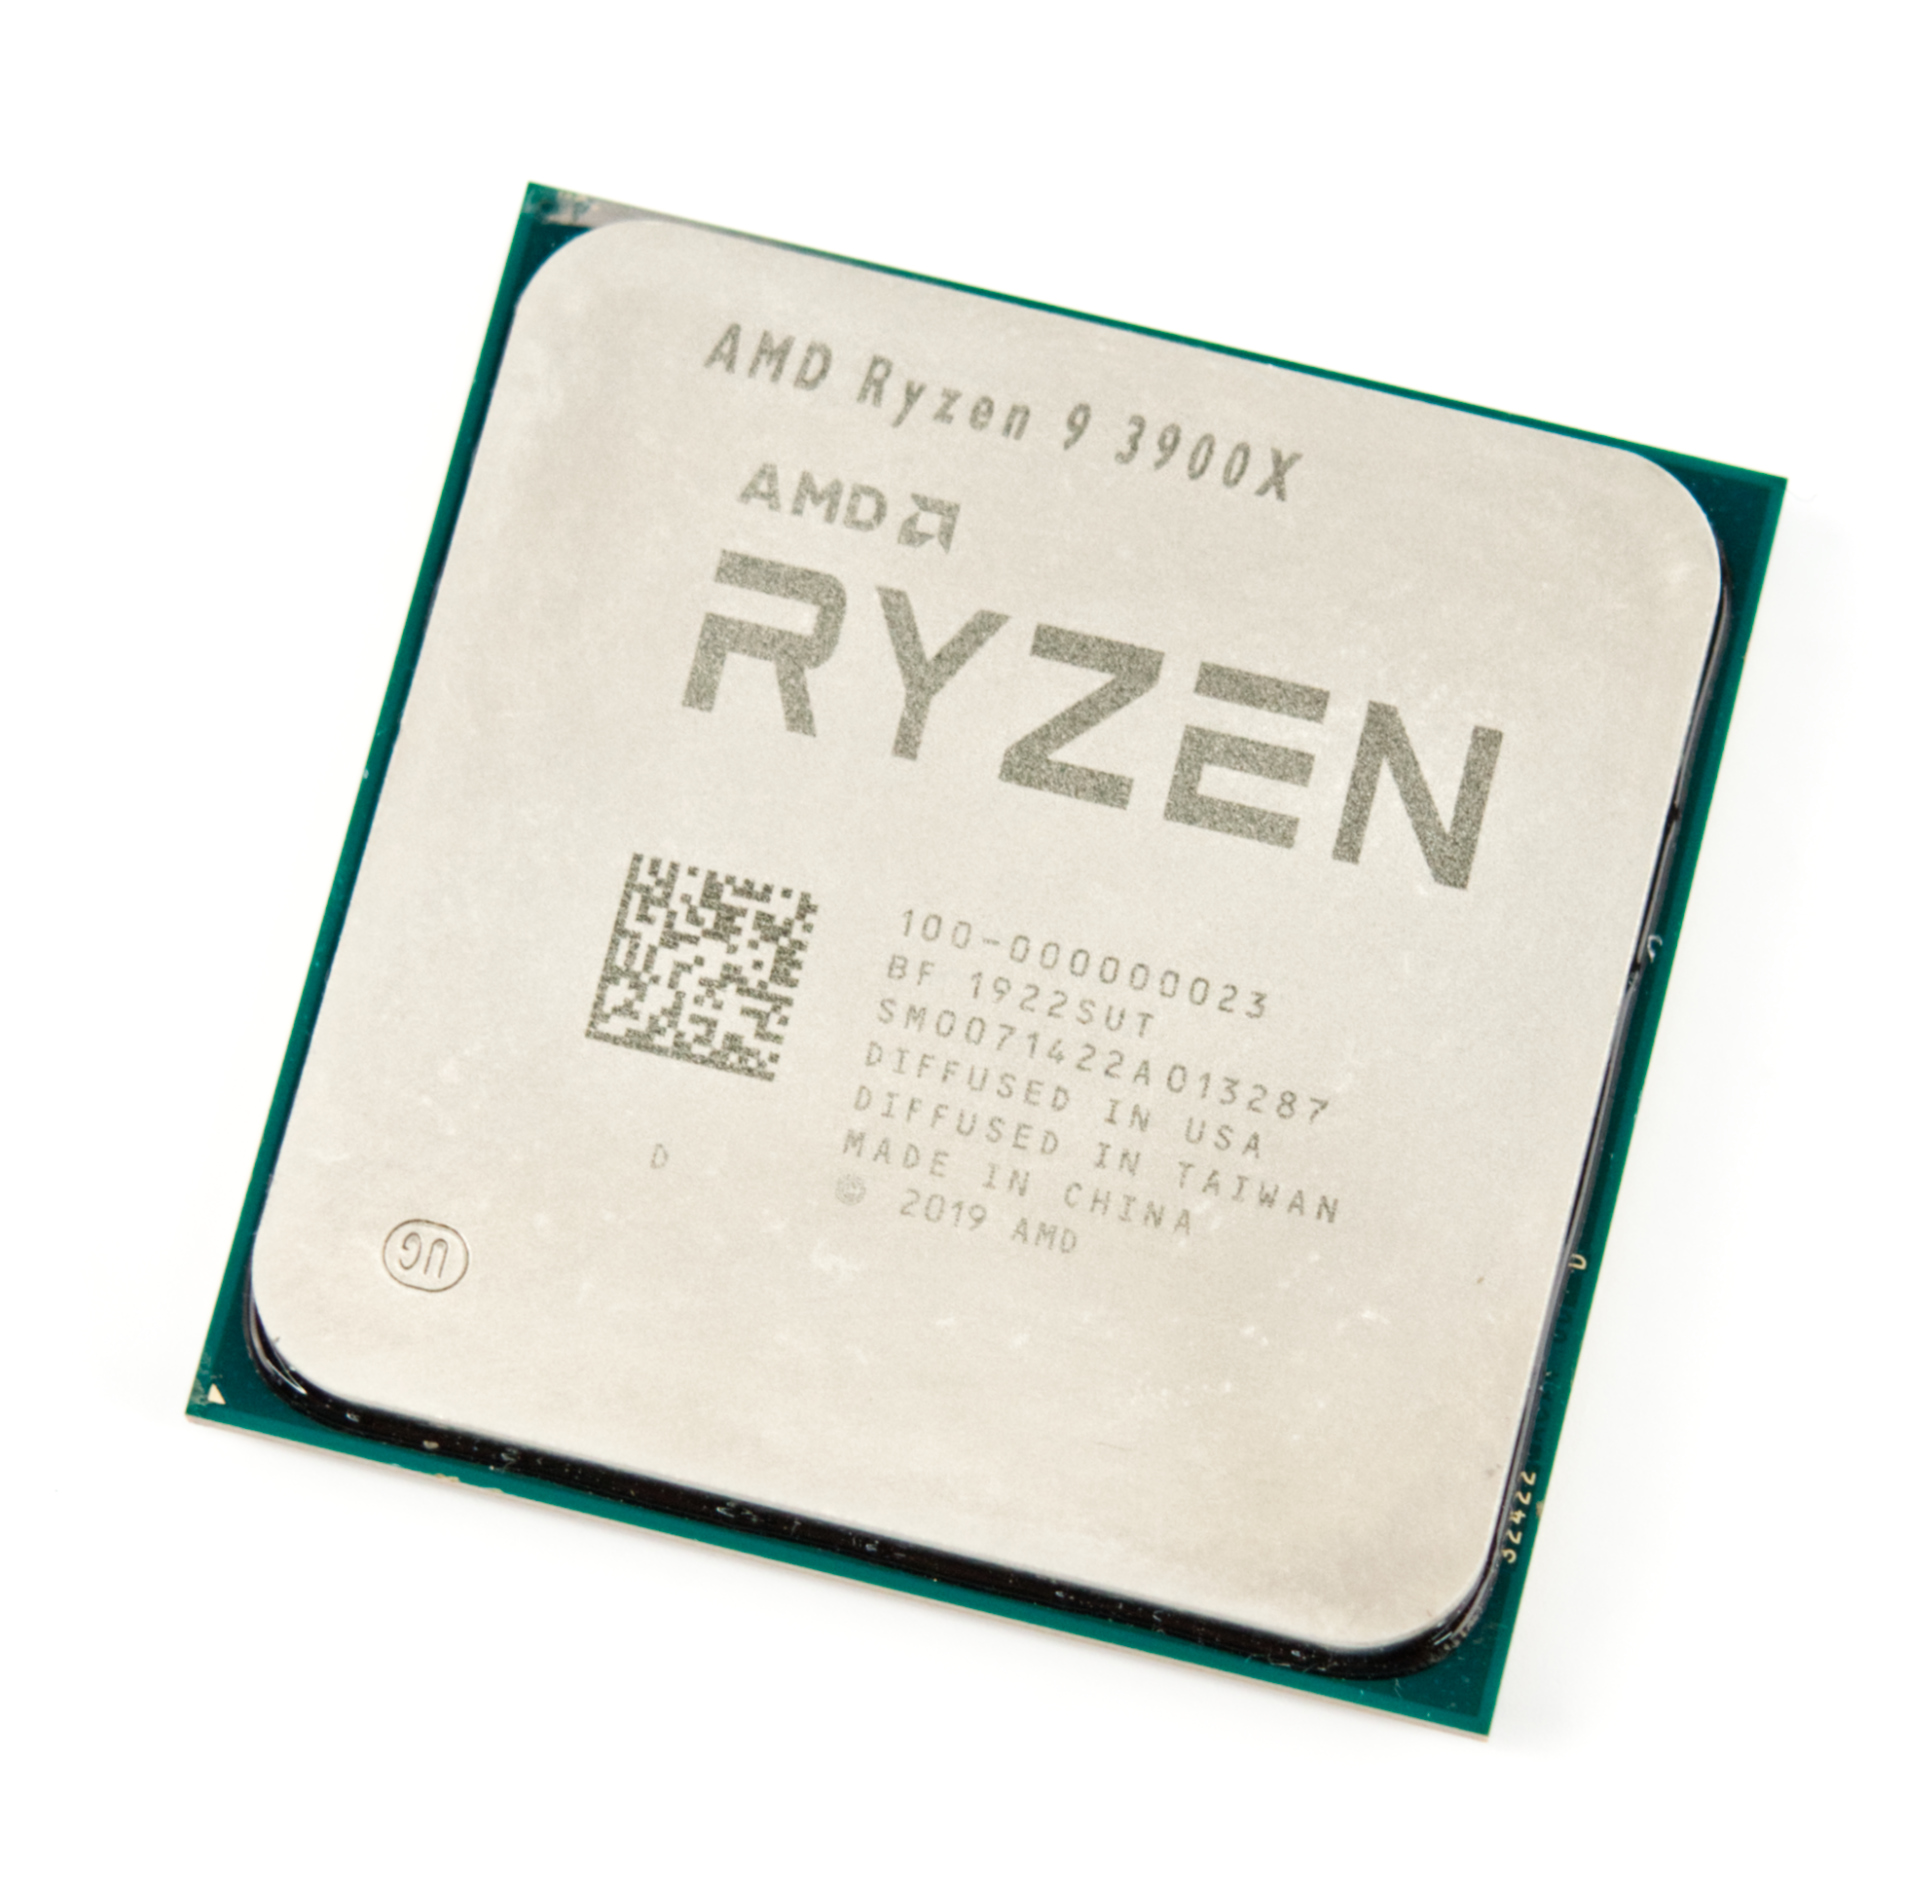 AMD Ryzen 9 3900X vs Intel Core i7-9750H vs Intel Core i7-8750H